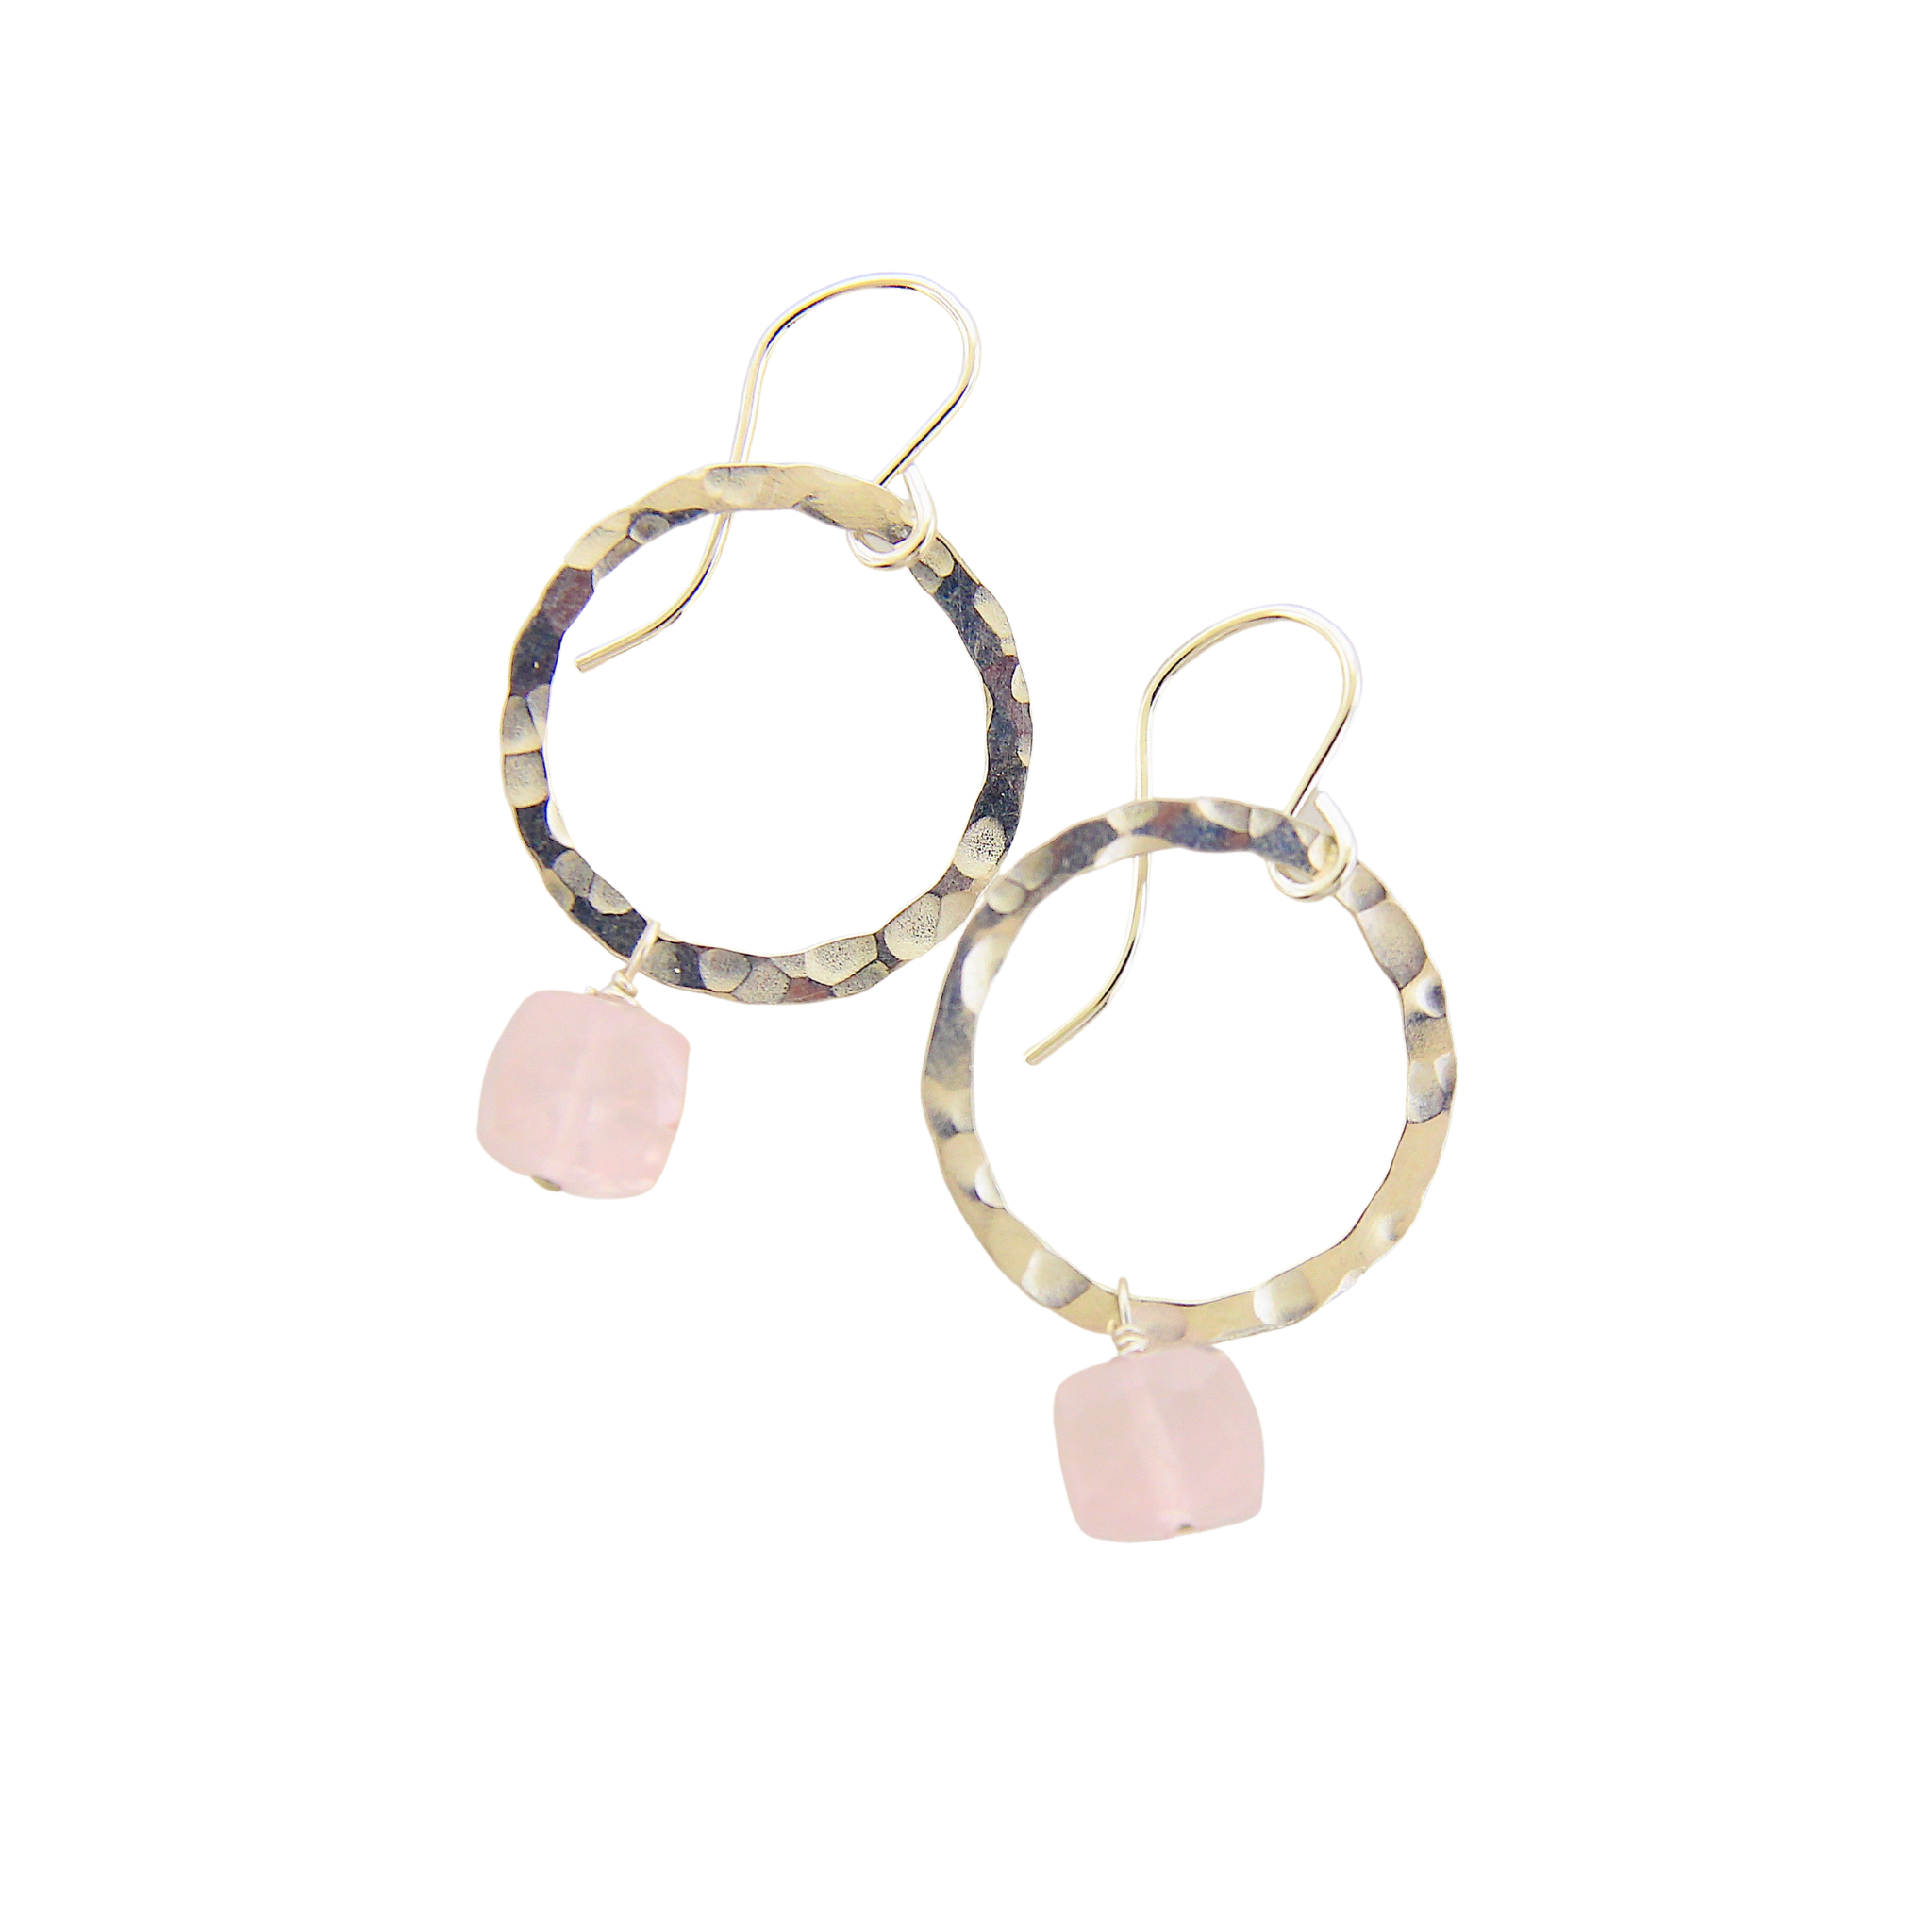 Hammered Silver Circle Earrings - Medium Rose Quartz